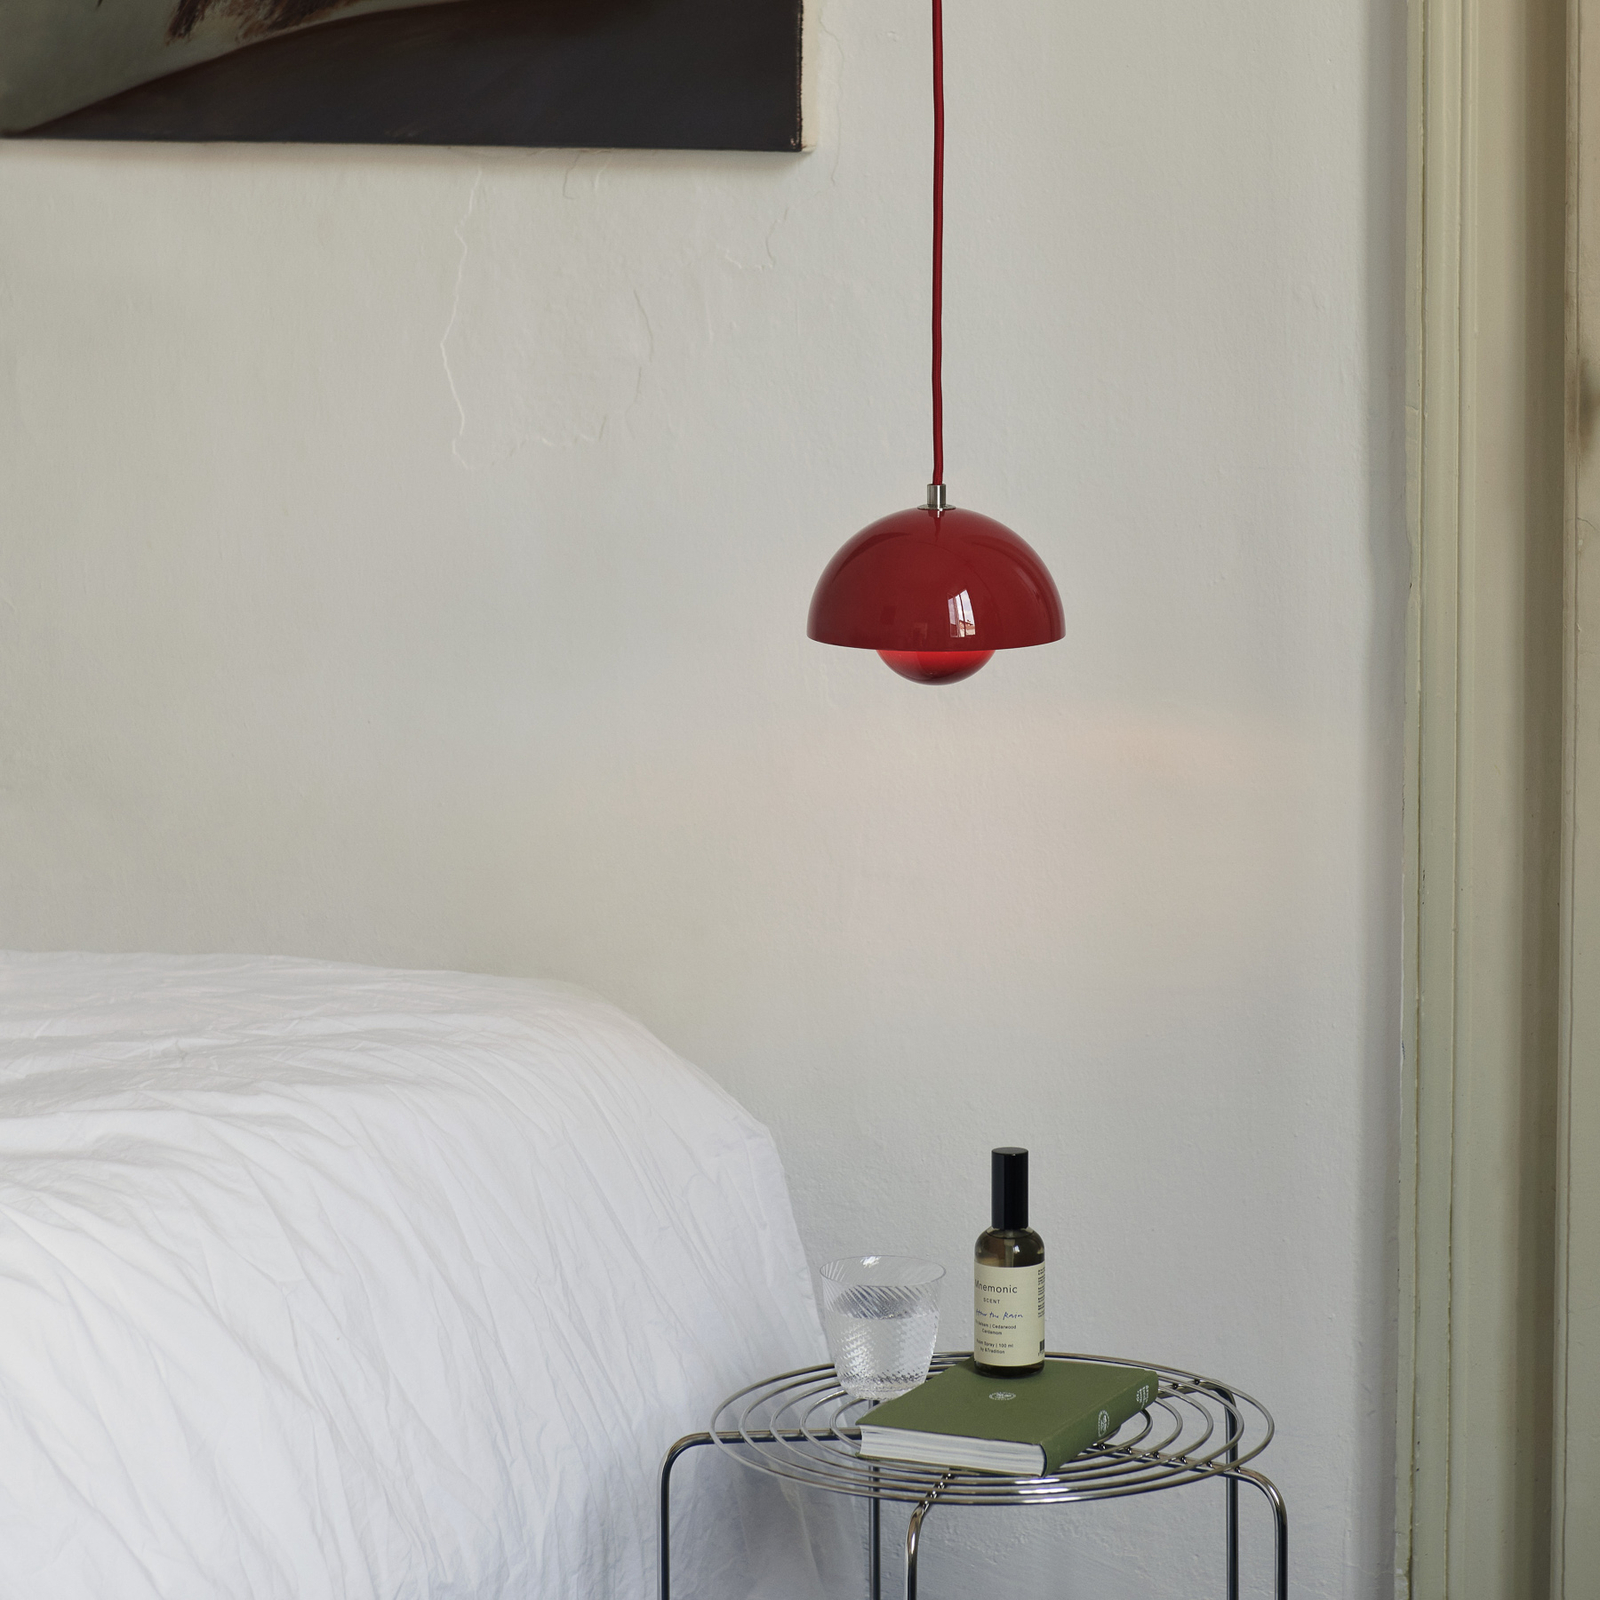 &Tradition viseća svjetiljka Flowerpot VP10, Ø 16 cm, cinober crvena